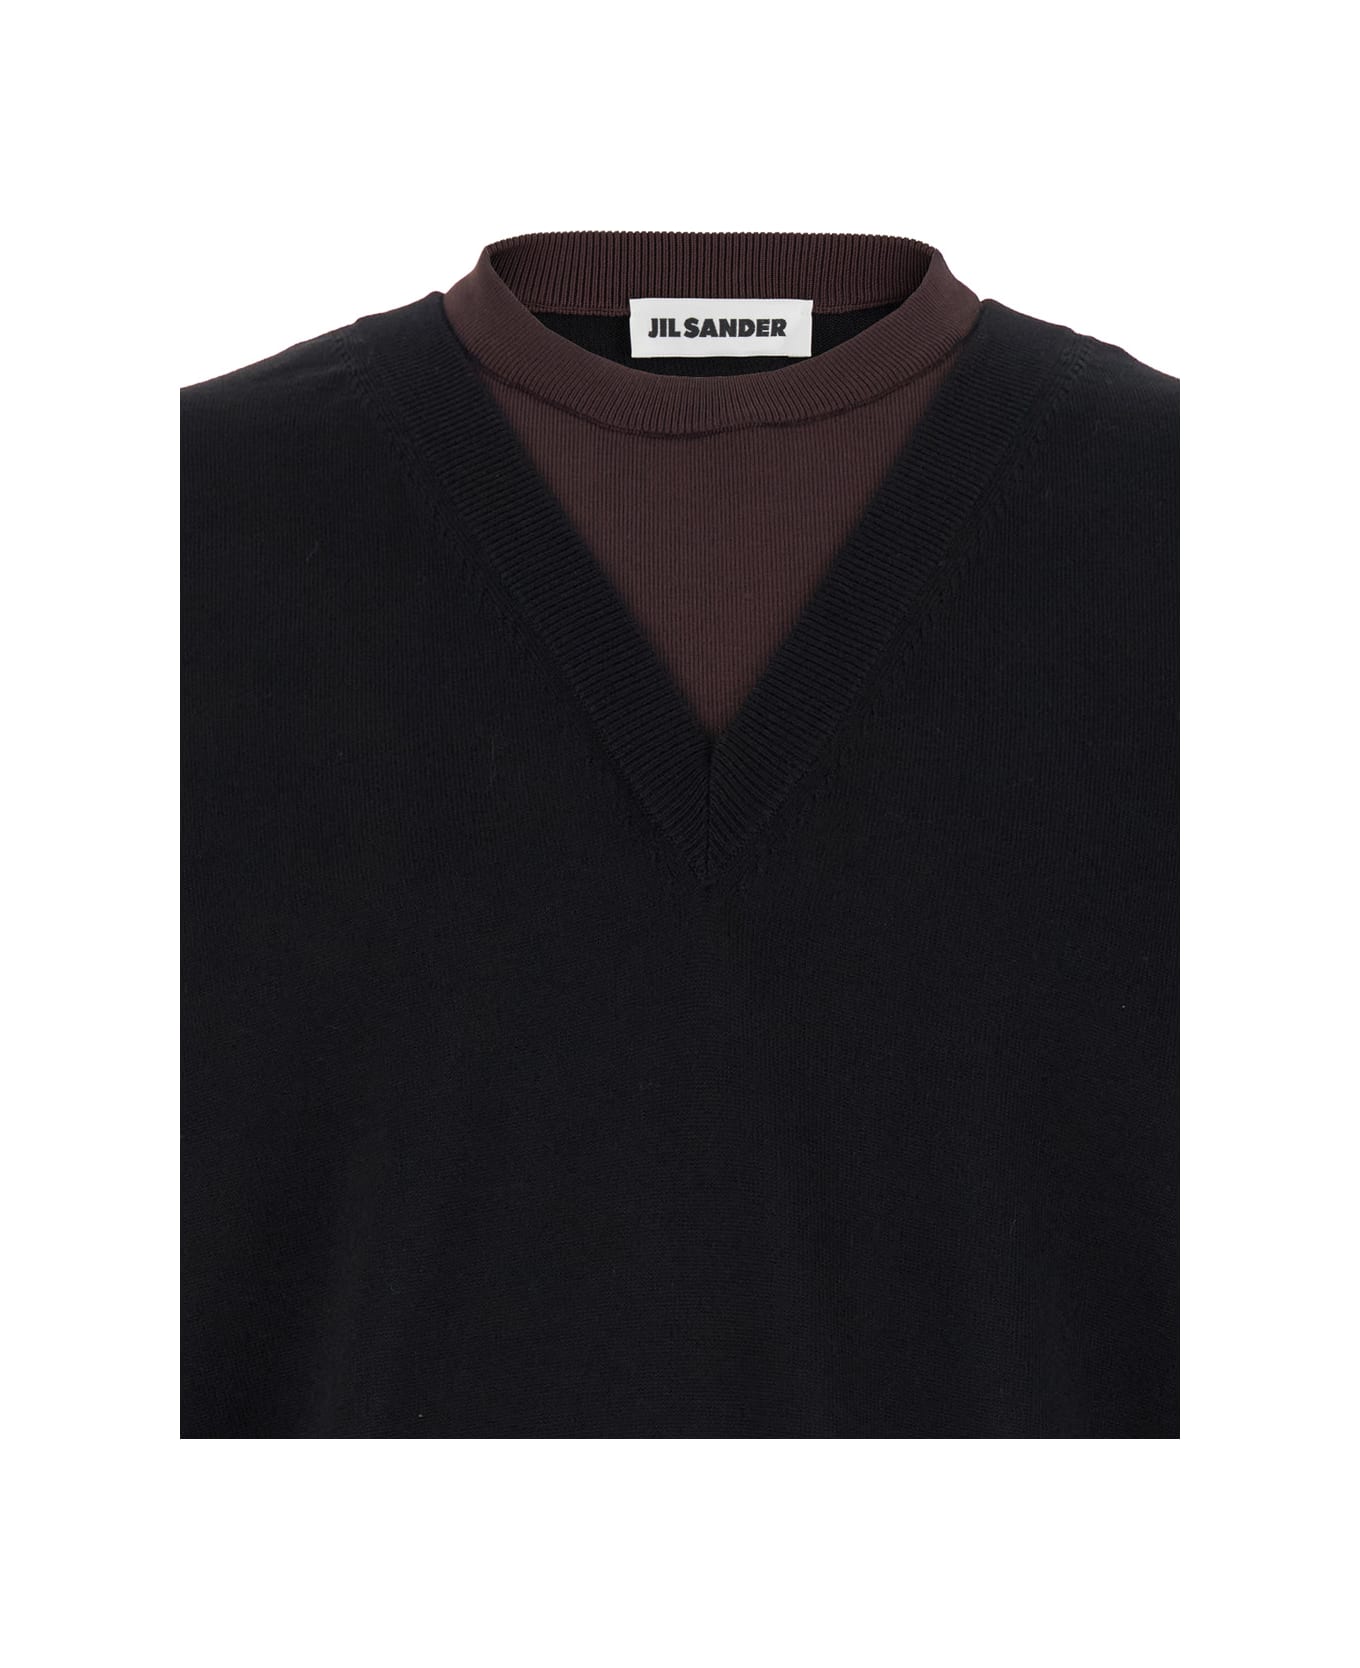 Jil Sander Black And Brown Double-neck Sweater In Wool Man - Black